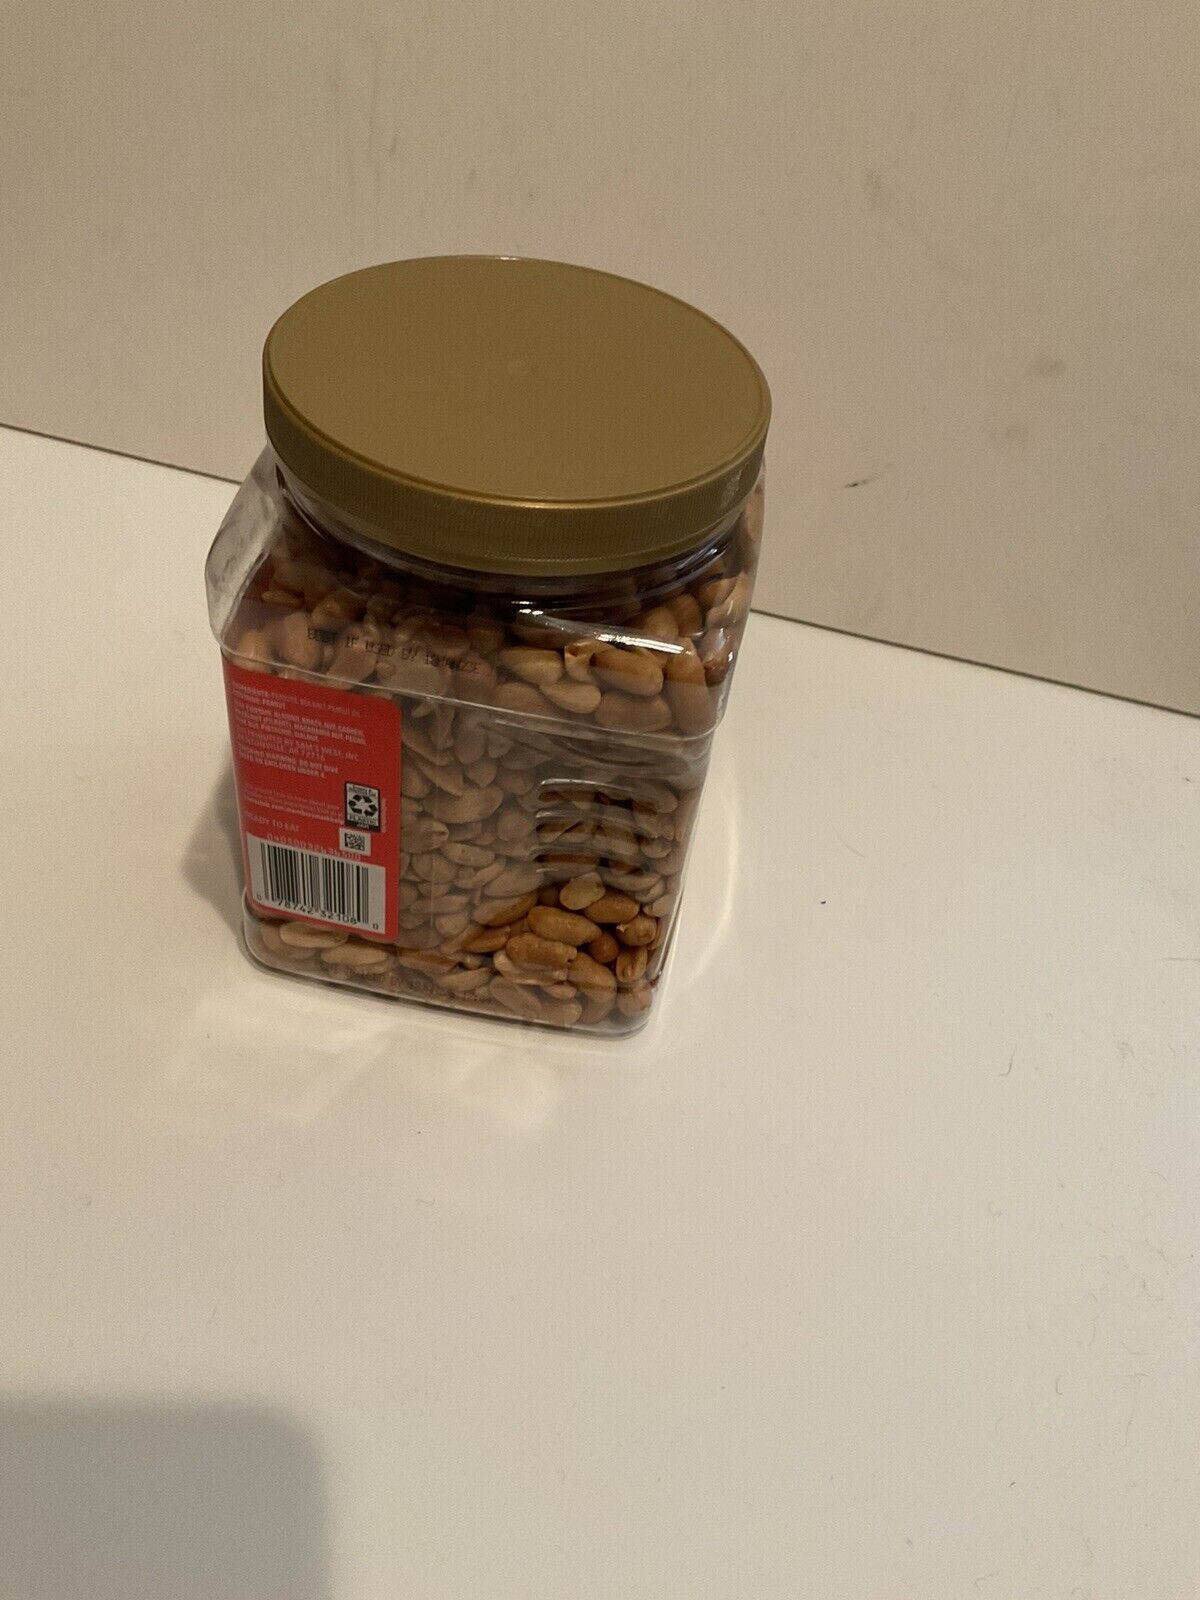 Member's Mark Extra Large Virginia Peanuts with Sea Salt, 34.5 Ounce